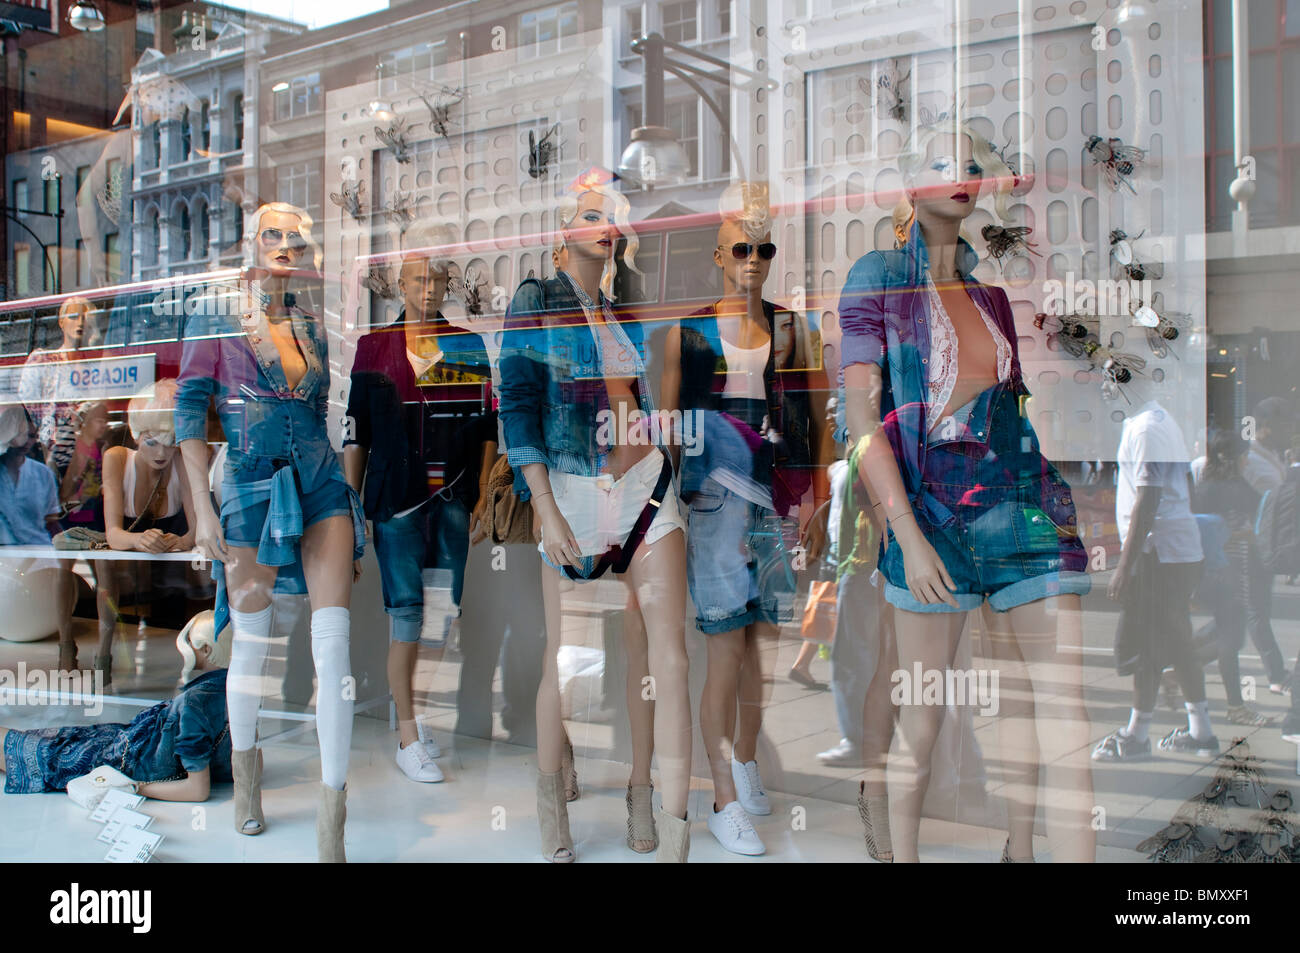 Zara shop england hi-res stock photography and images - Alamy